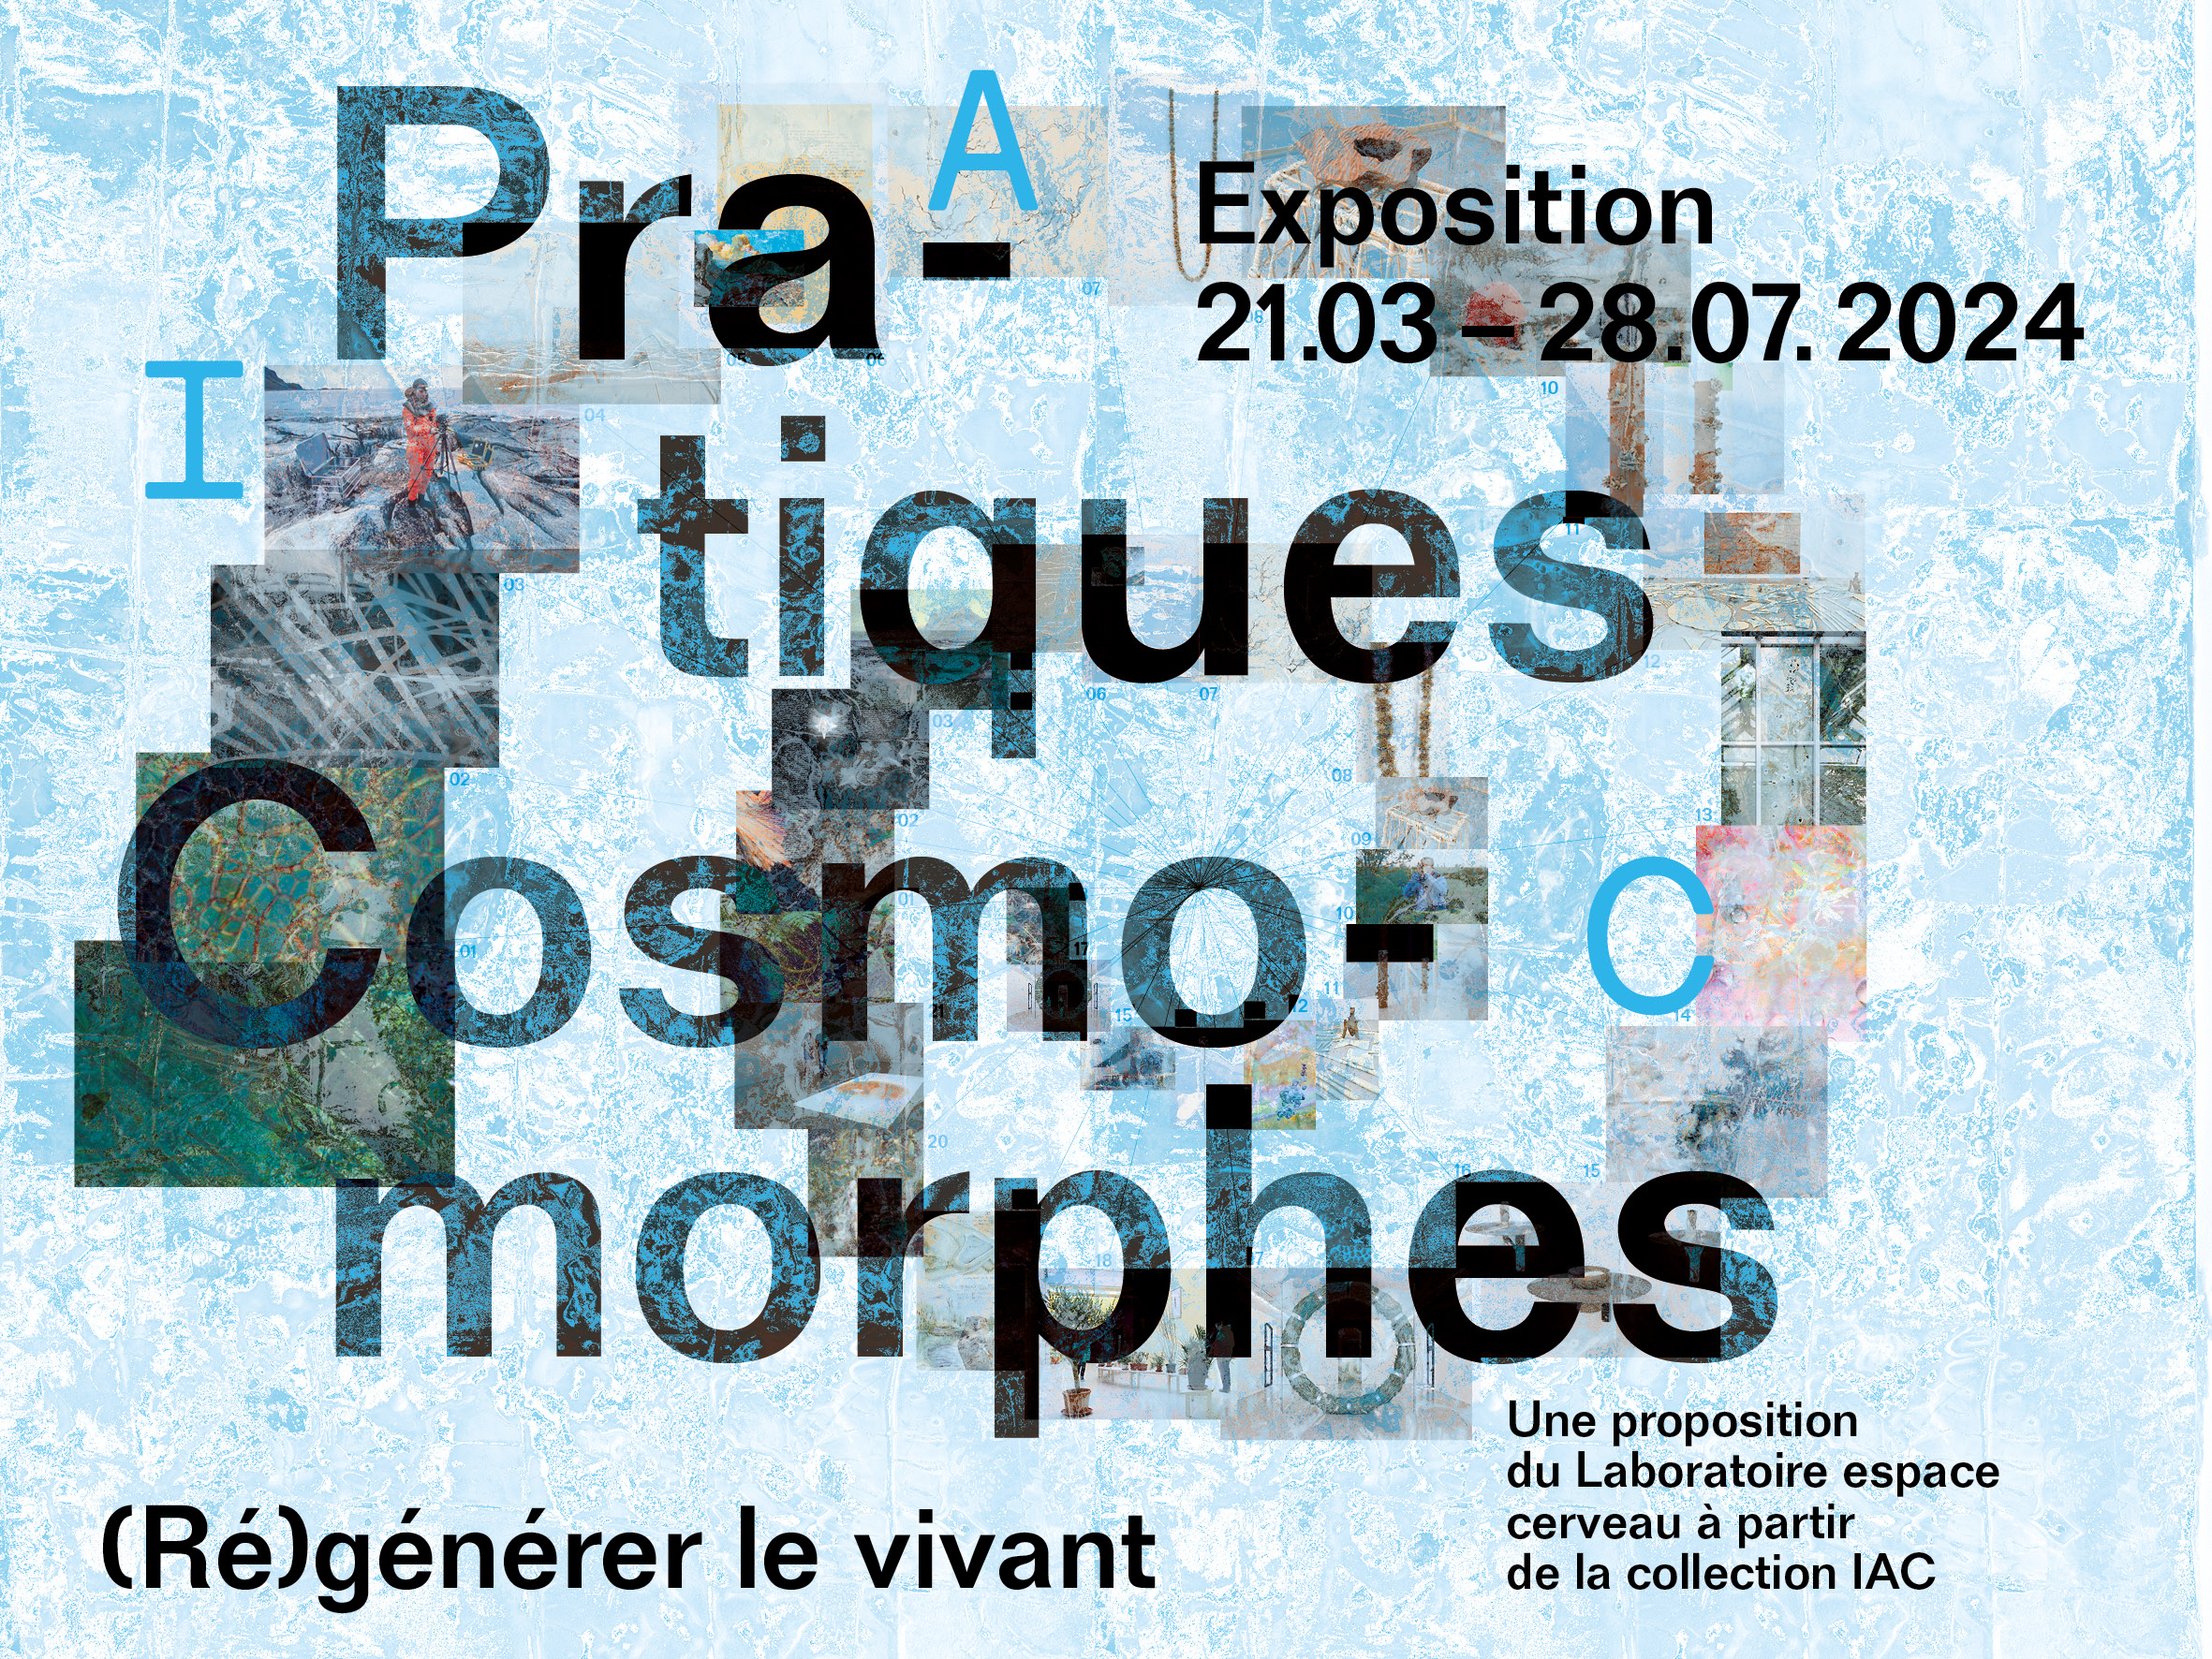 Institut d'art contemporain, Villeurbanne/Rhône-Alpes